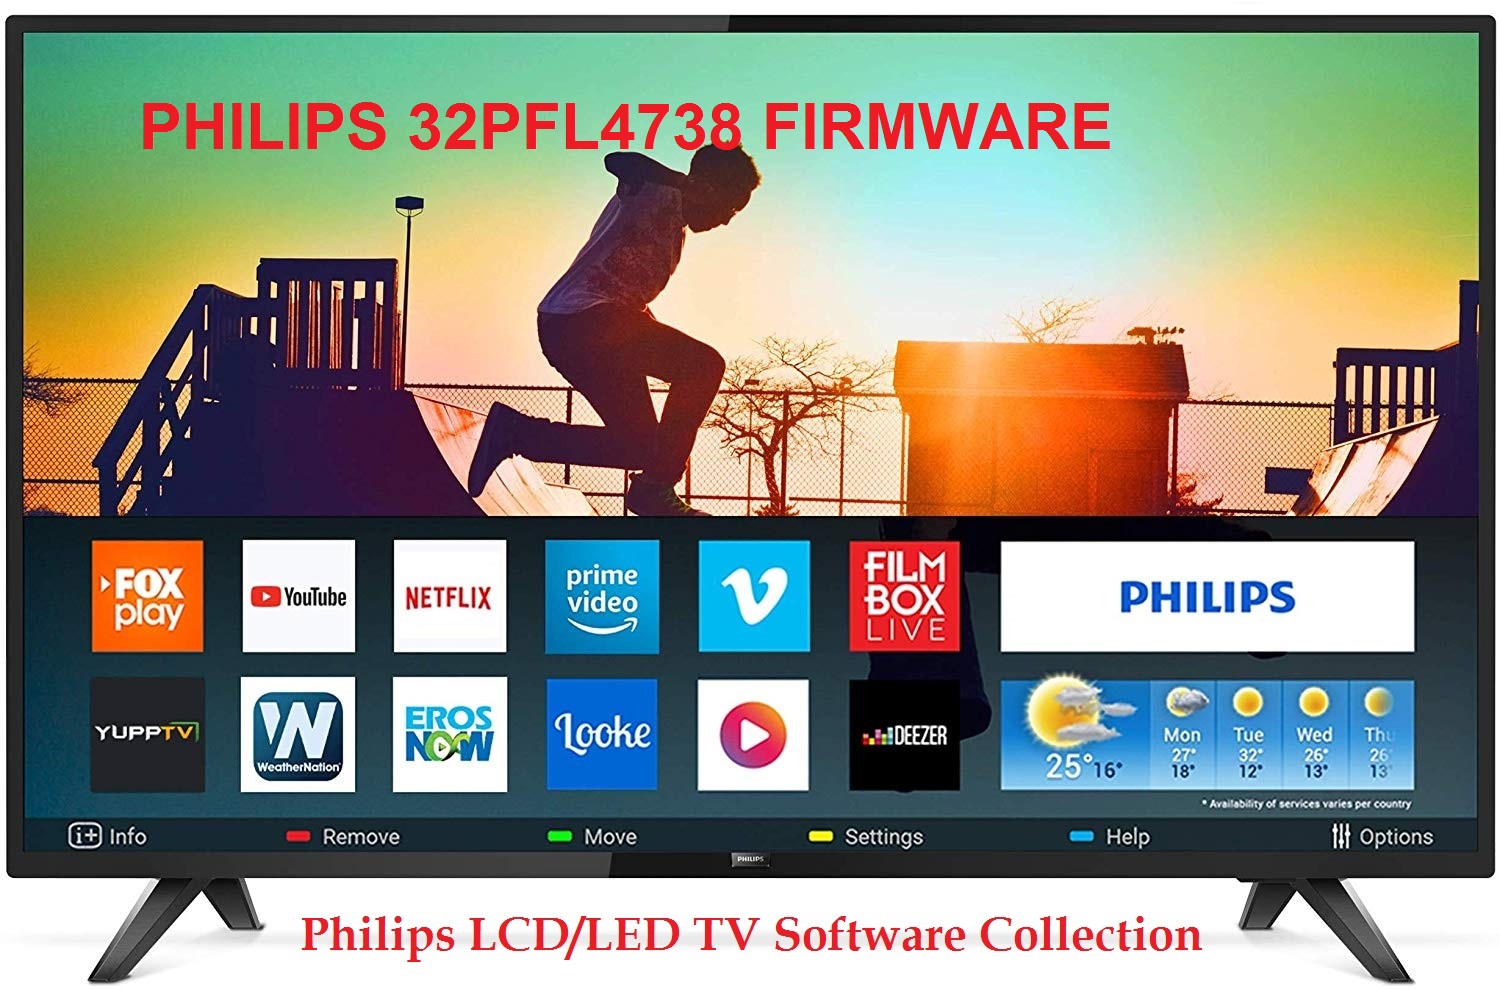 Philips 32Pfl4738